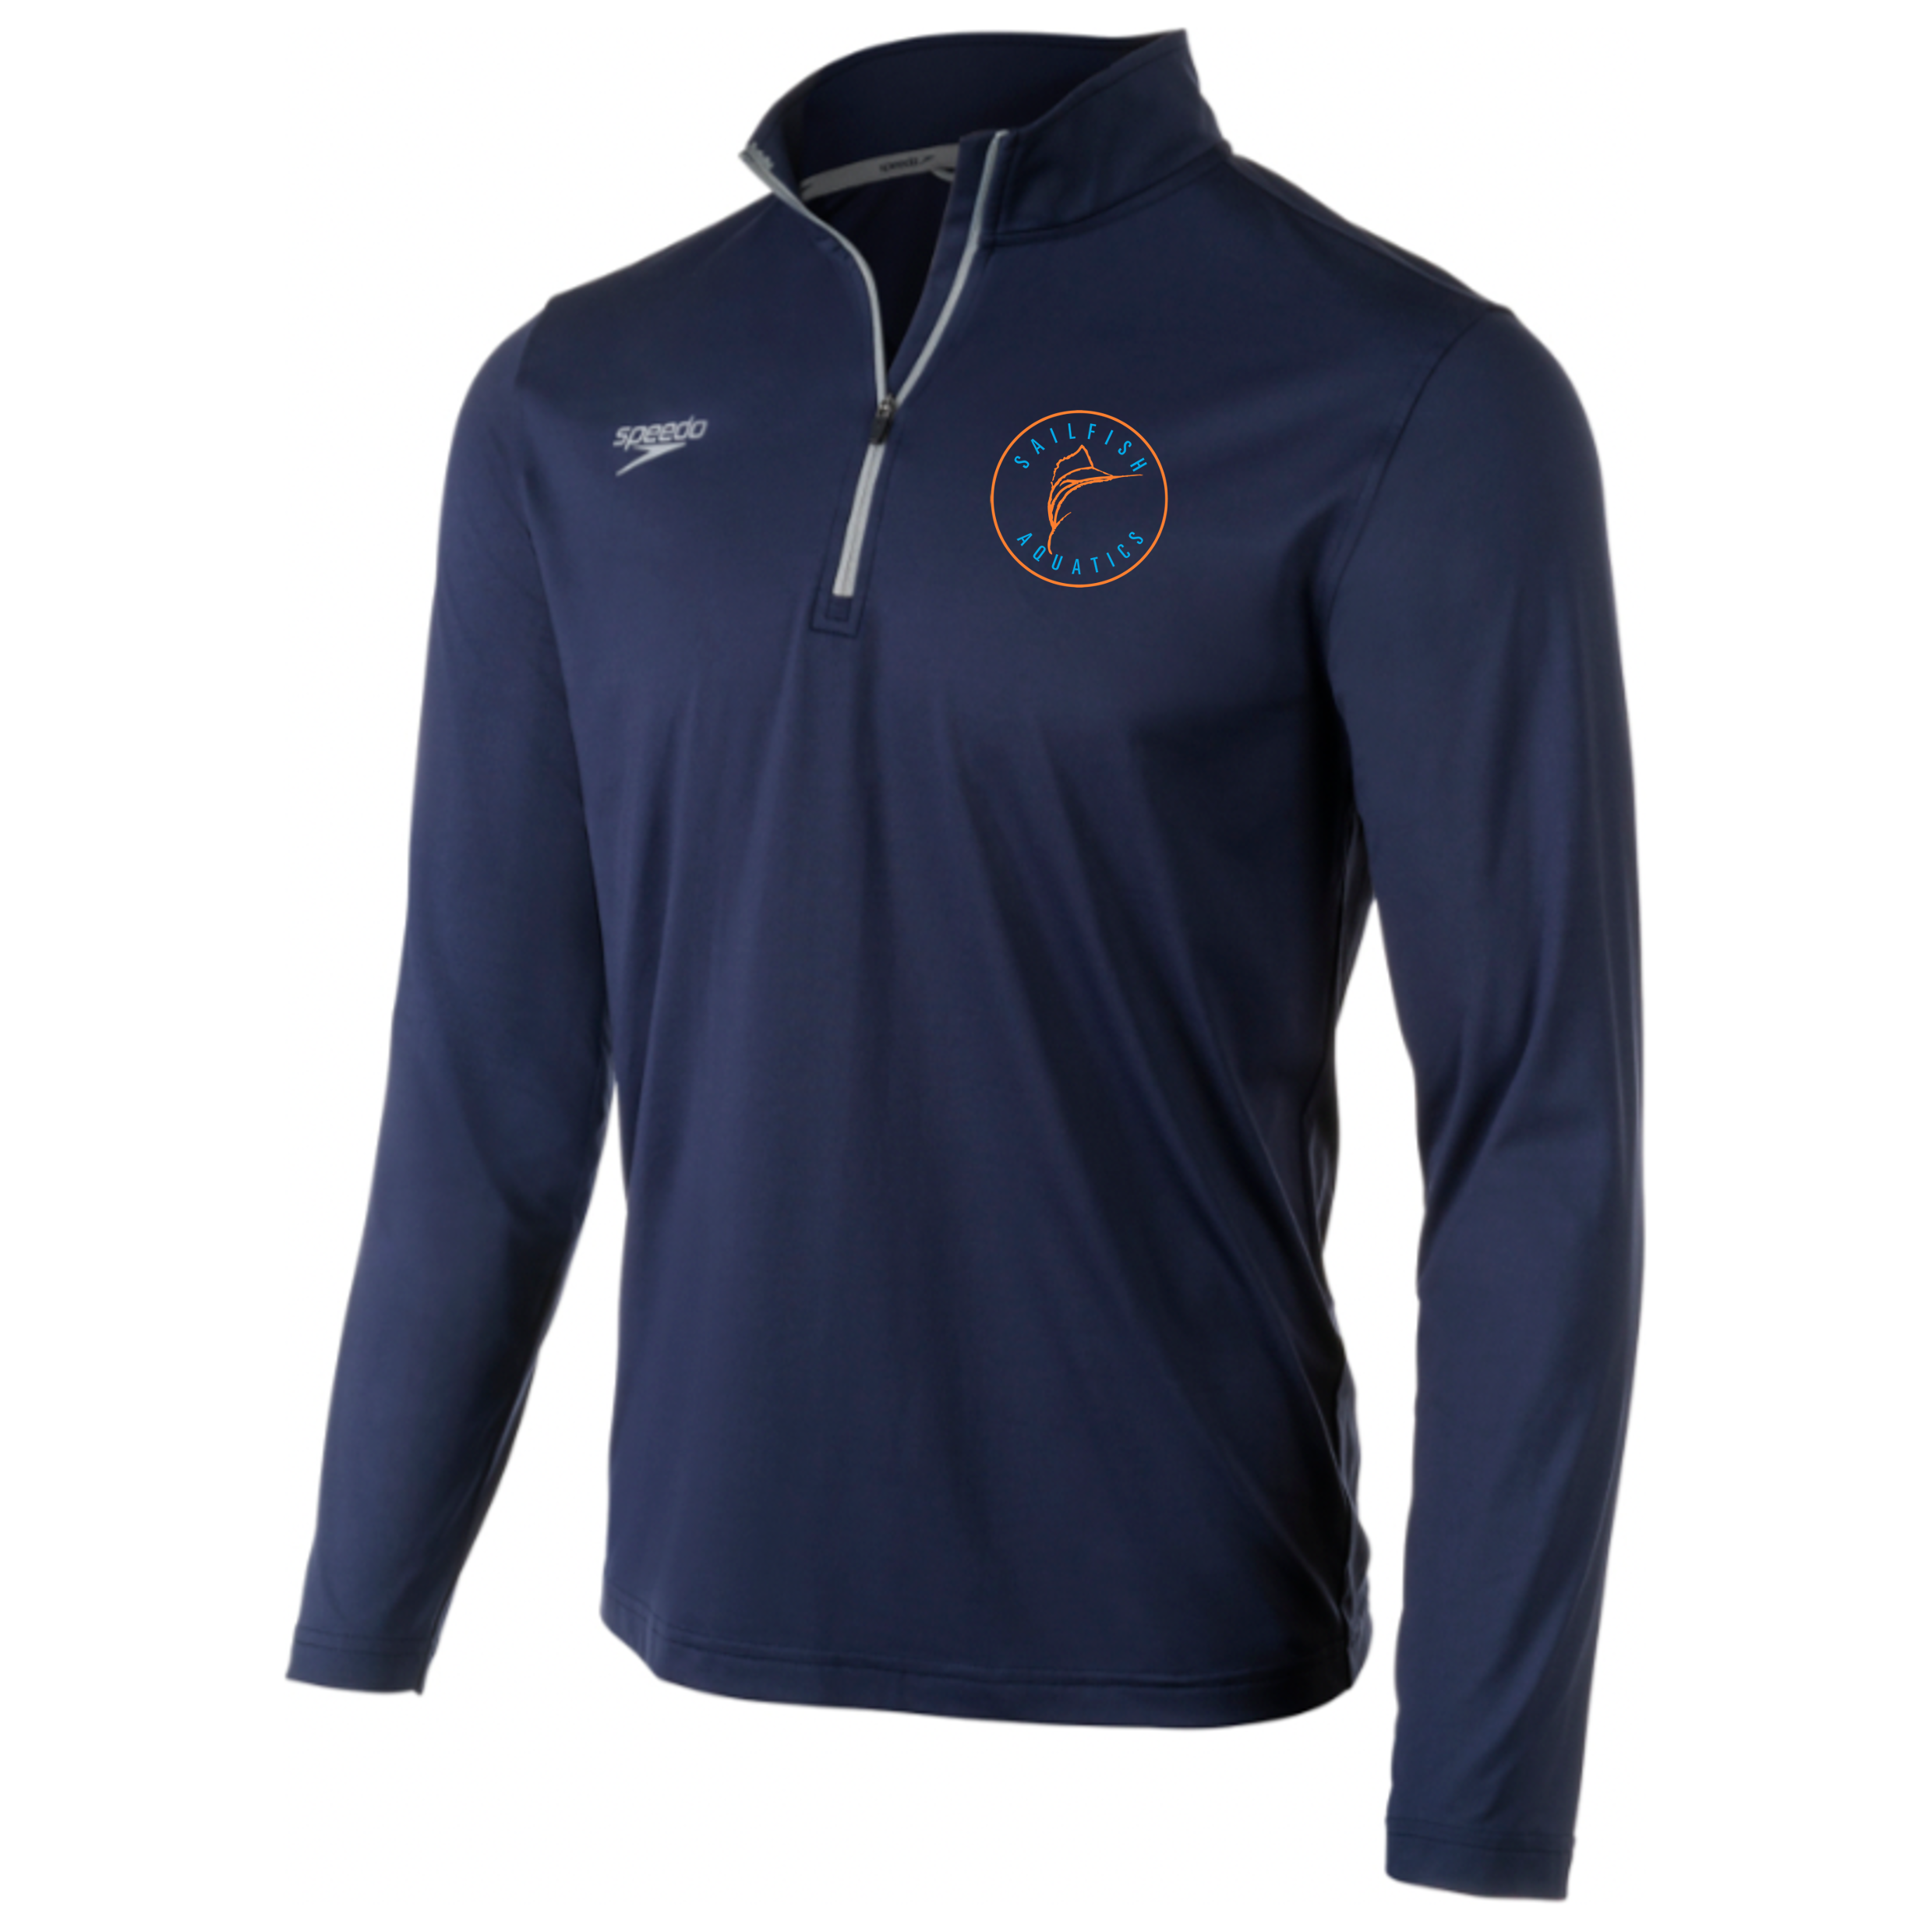 Speedo Jersey 1/4 Zip Long Sleeve T-Shirt (Customized) - Sailfish